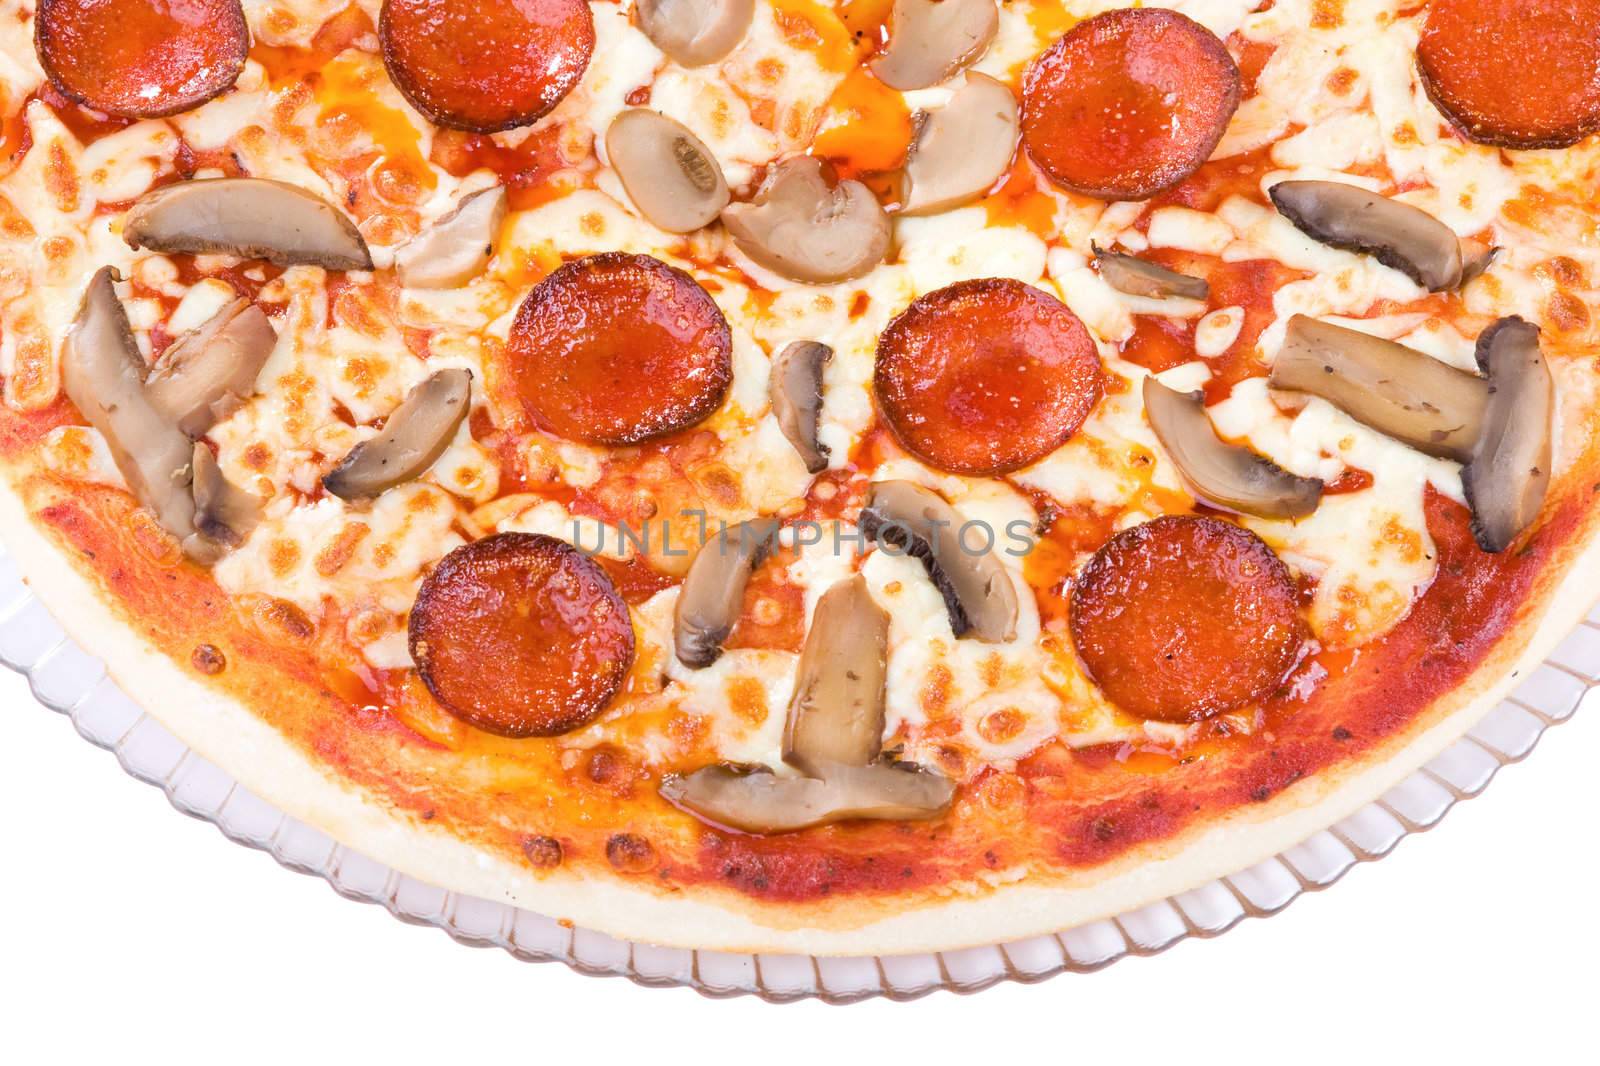 Pepperoni Pizza by vsurkov